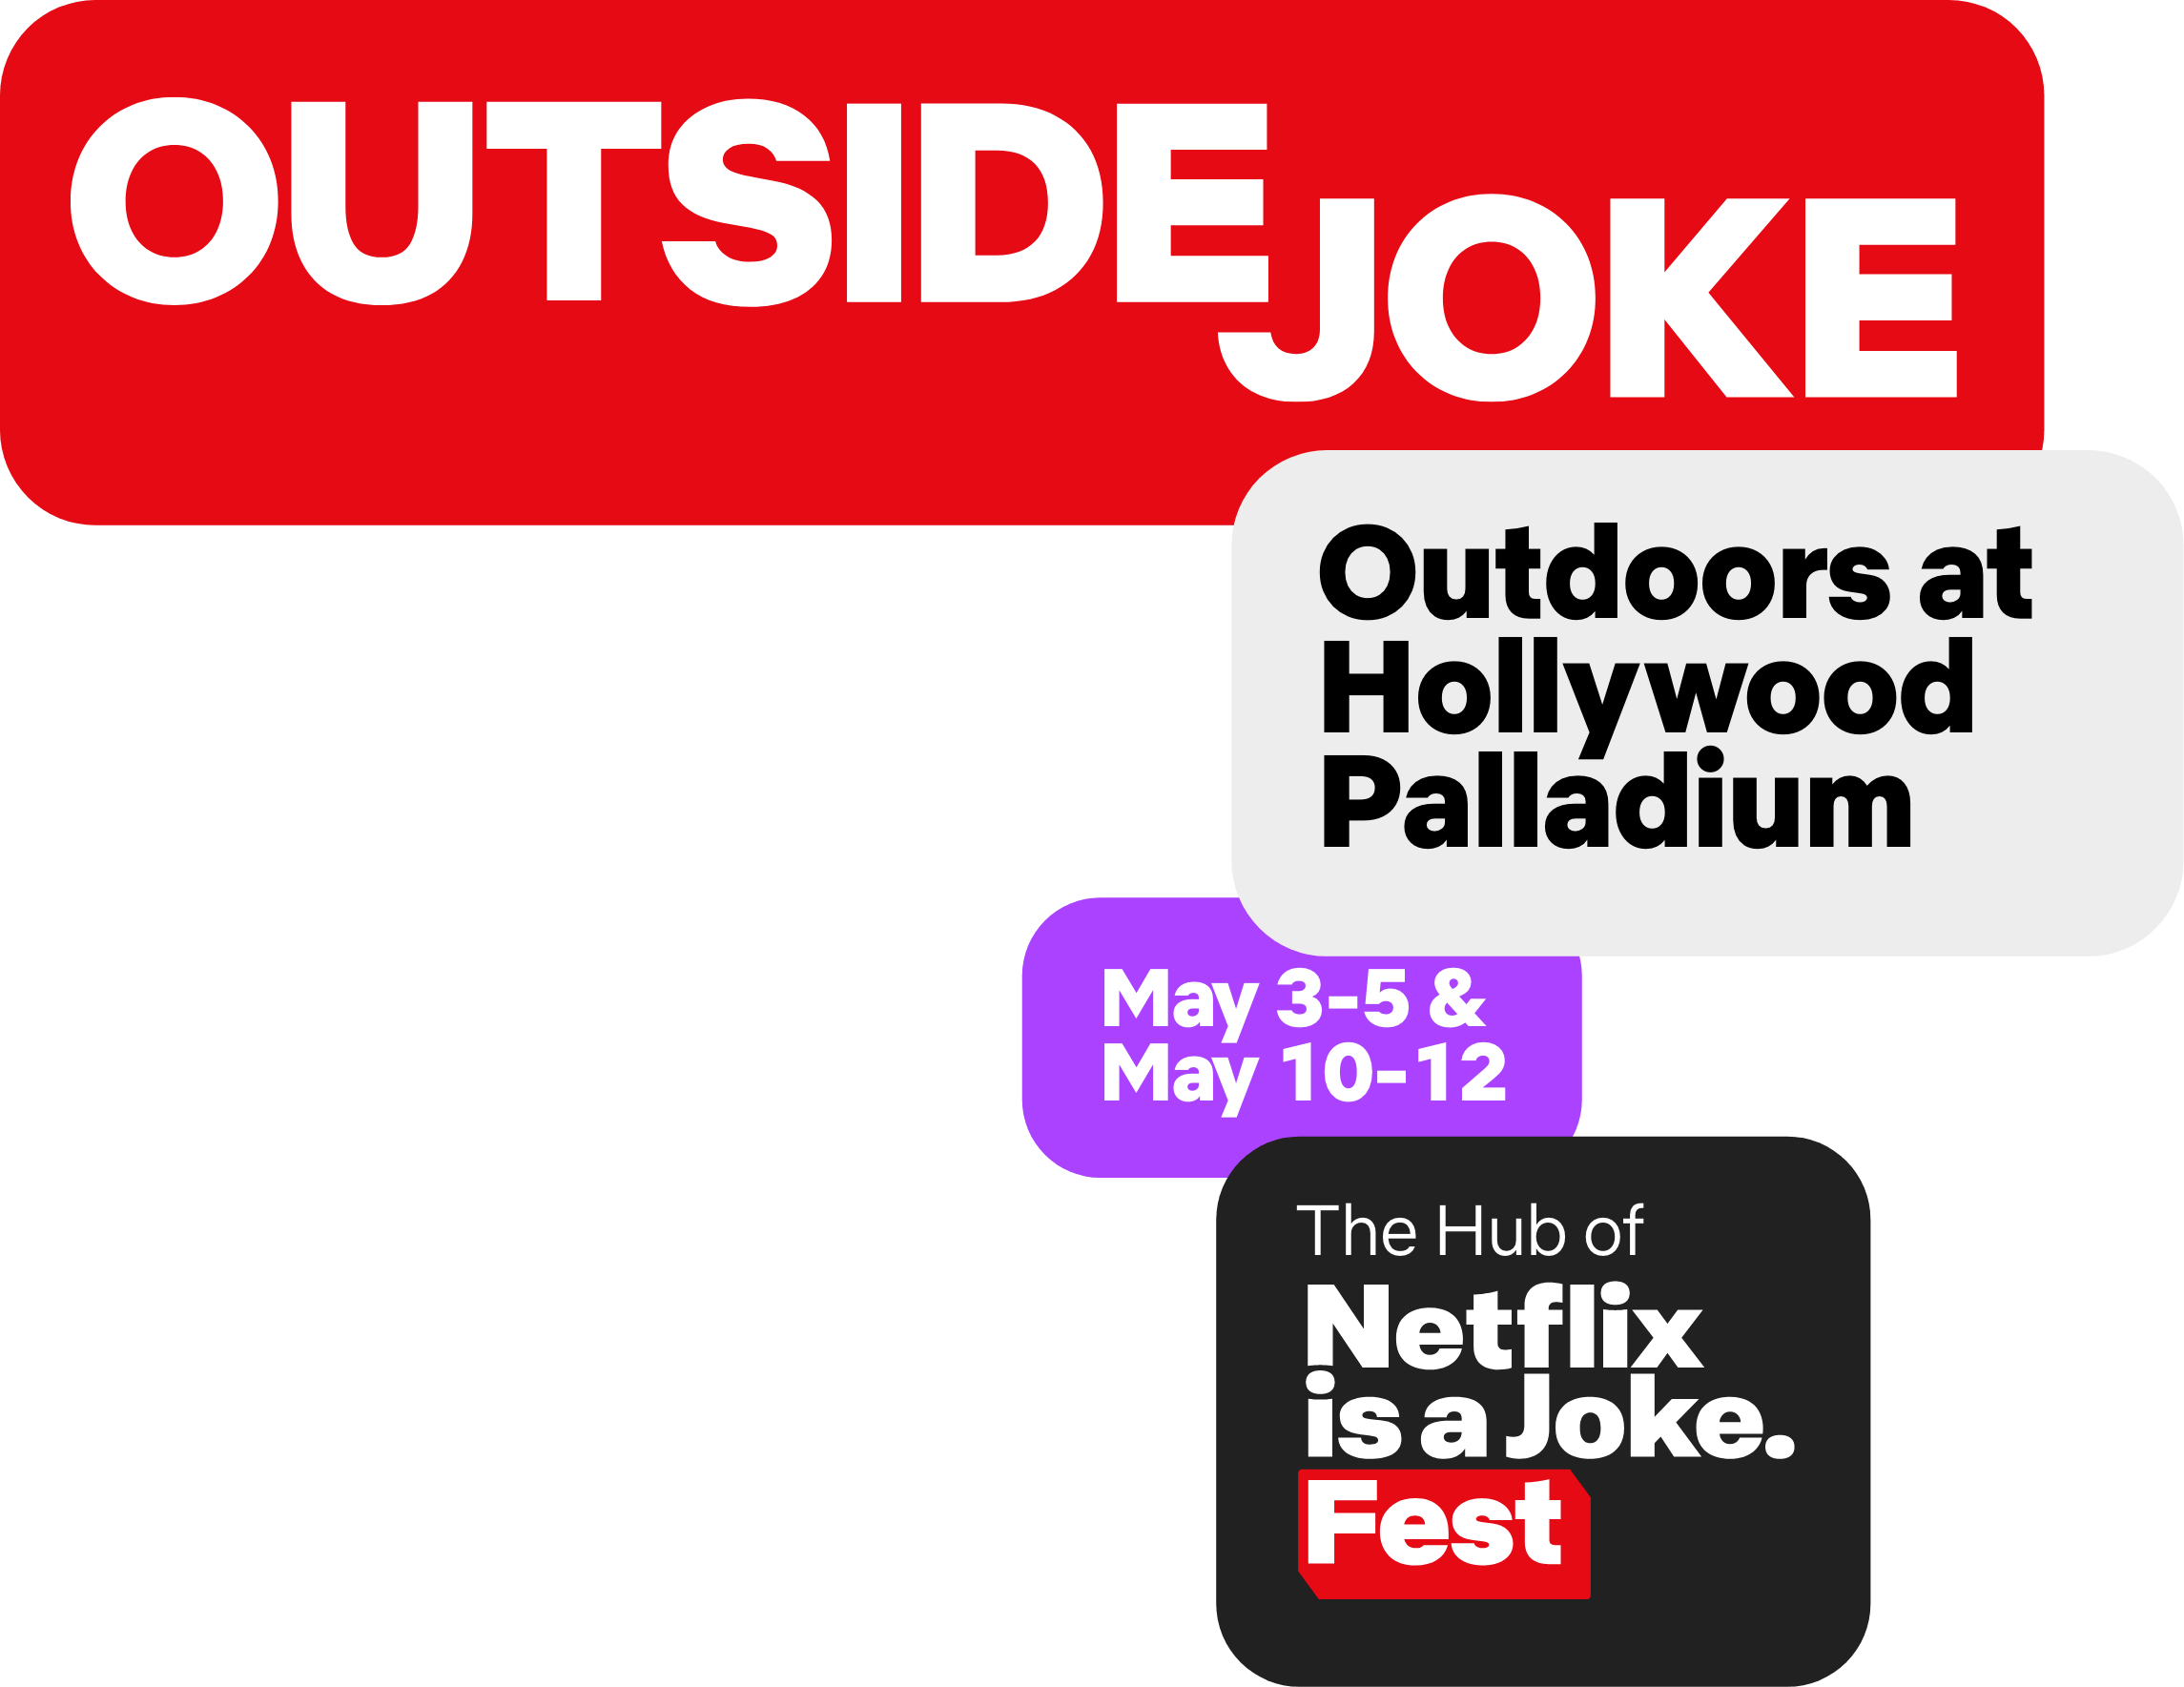 Outside Joke Outdoors at Hollywood Palladium